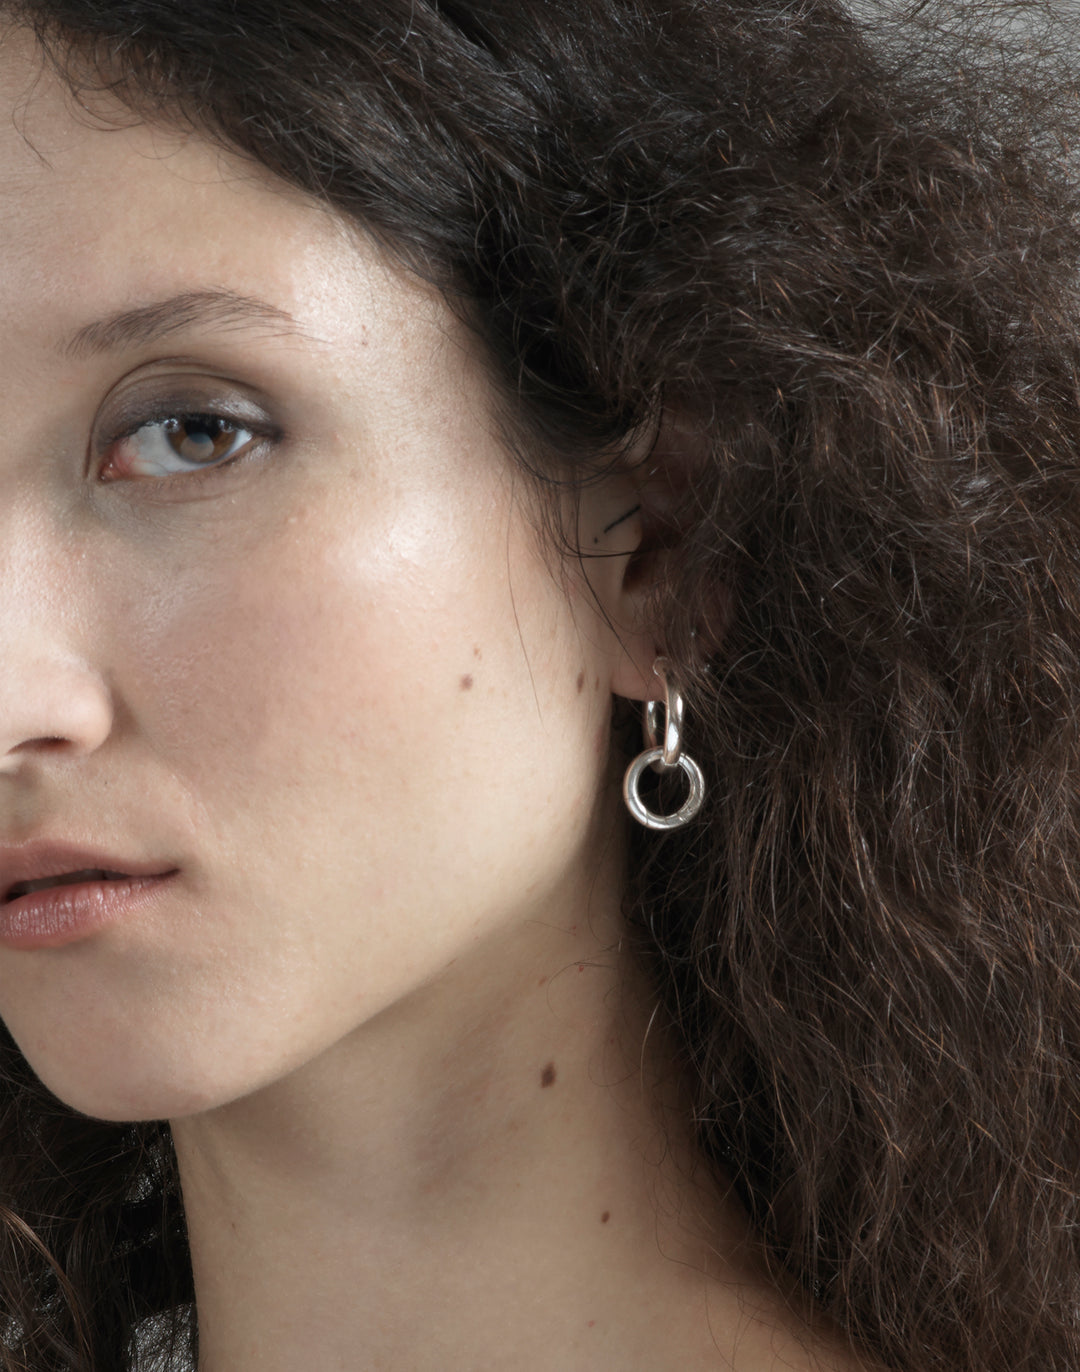 llayers Silver loop women hoops earring minimal jewelry eternity Made In Brooklyn New York